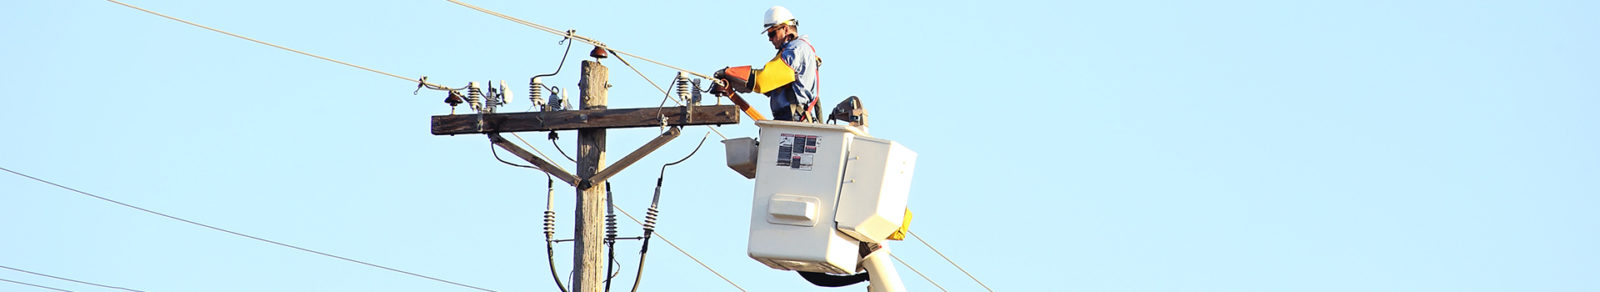 lineworker working on powerlines